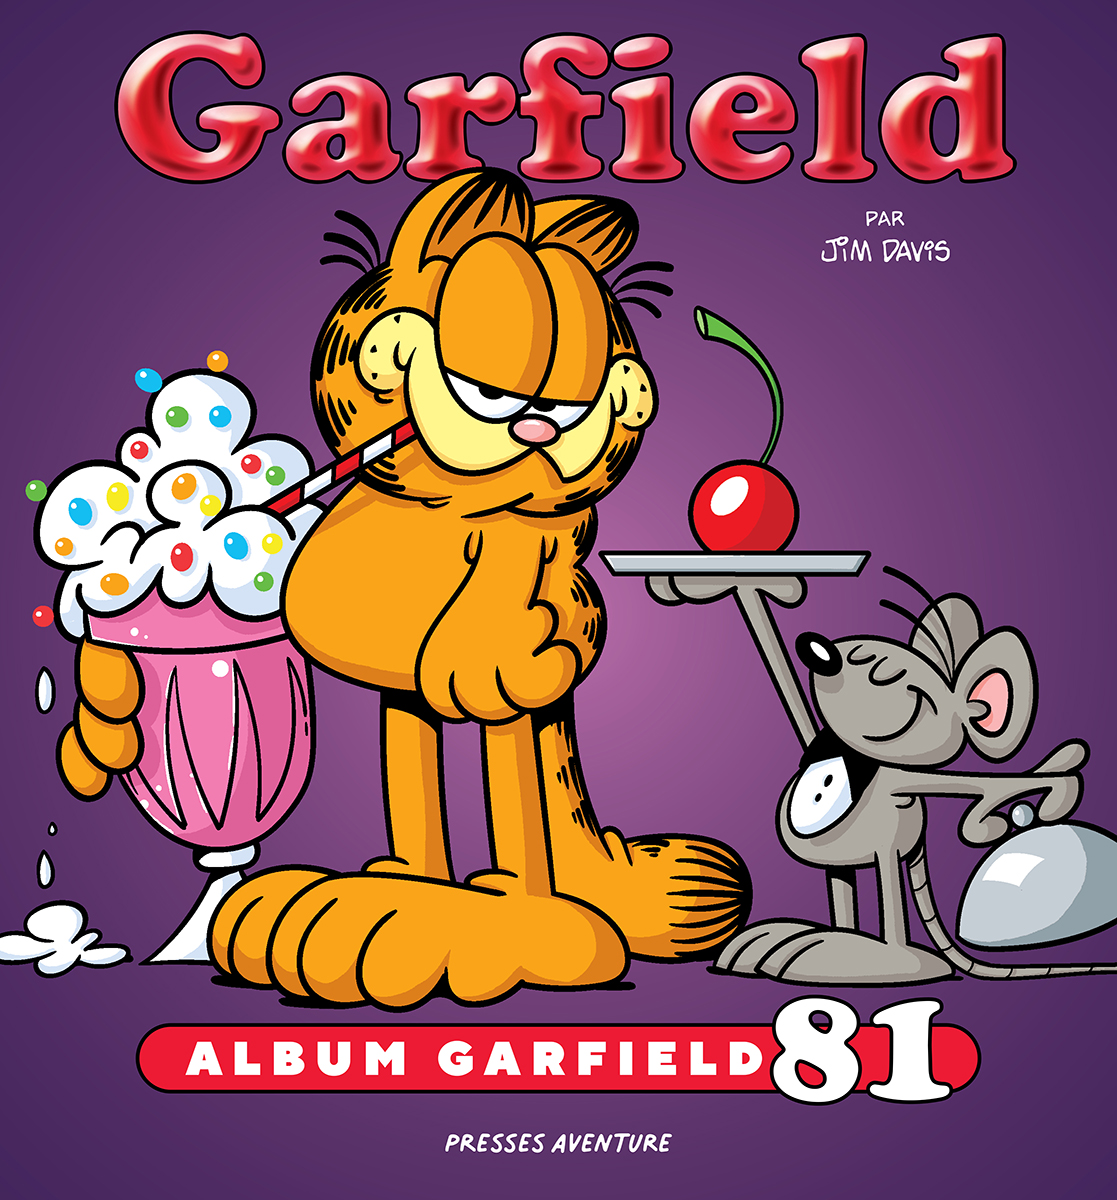  Garfield no 81 